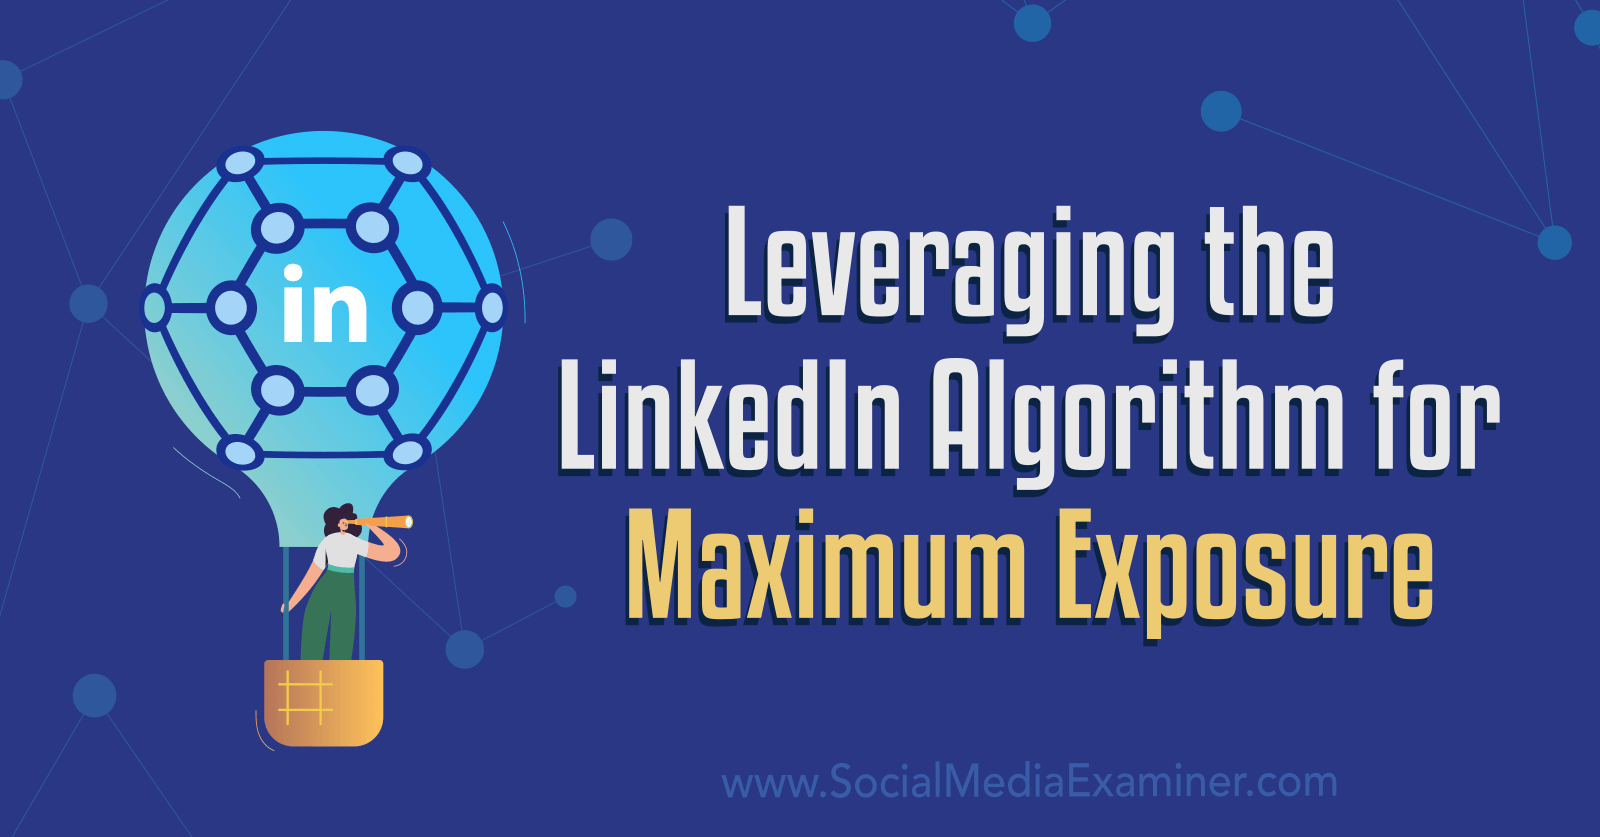 Leveraging the LinkedIn Algorithm for Maximum Exposure by Social Media Examiner